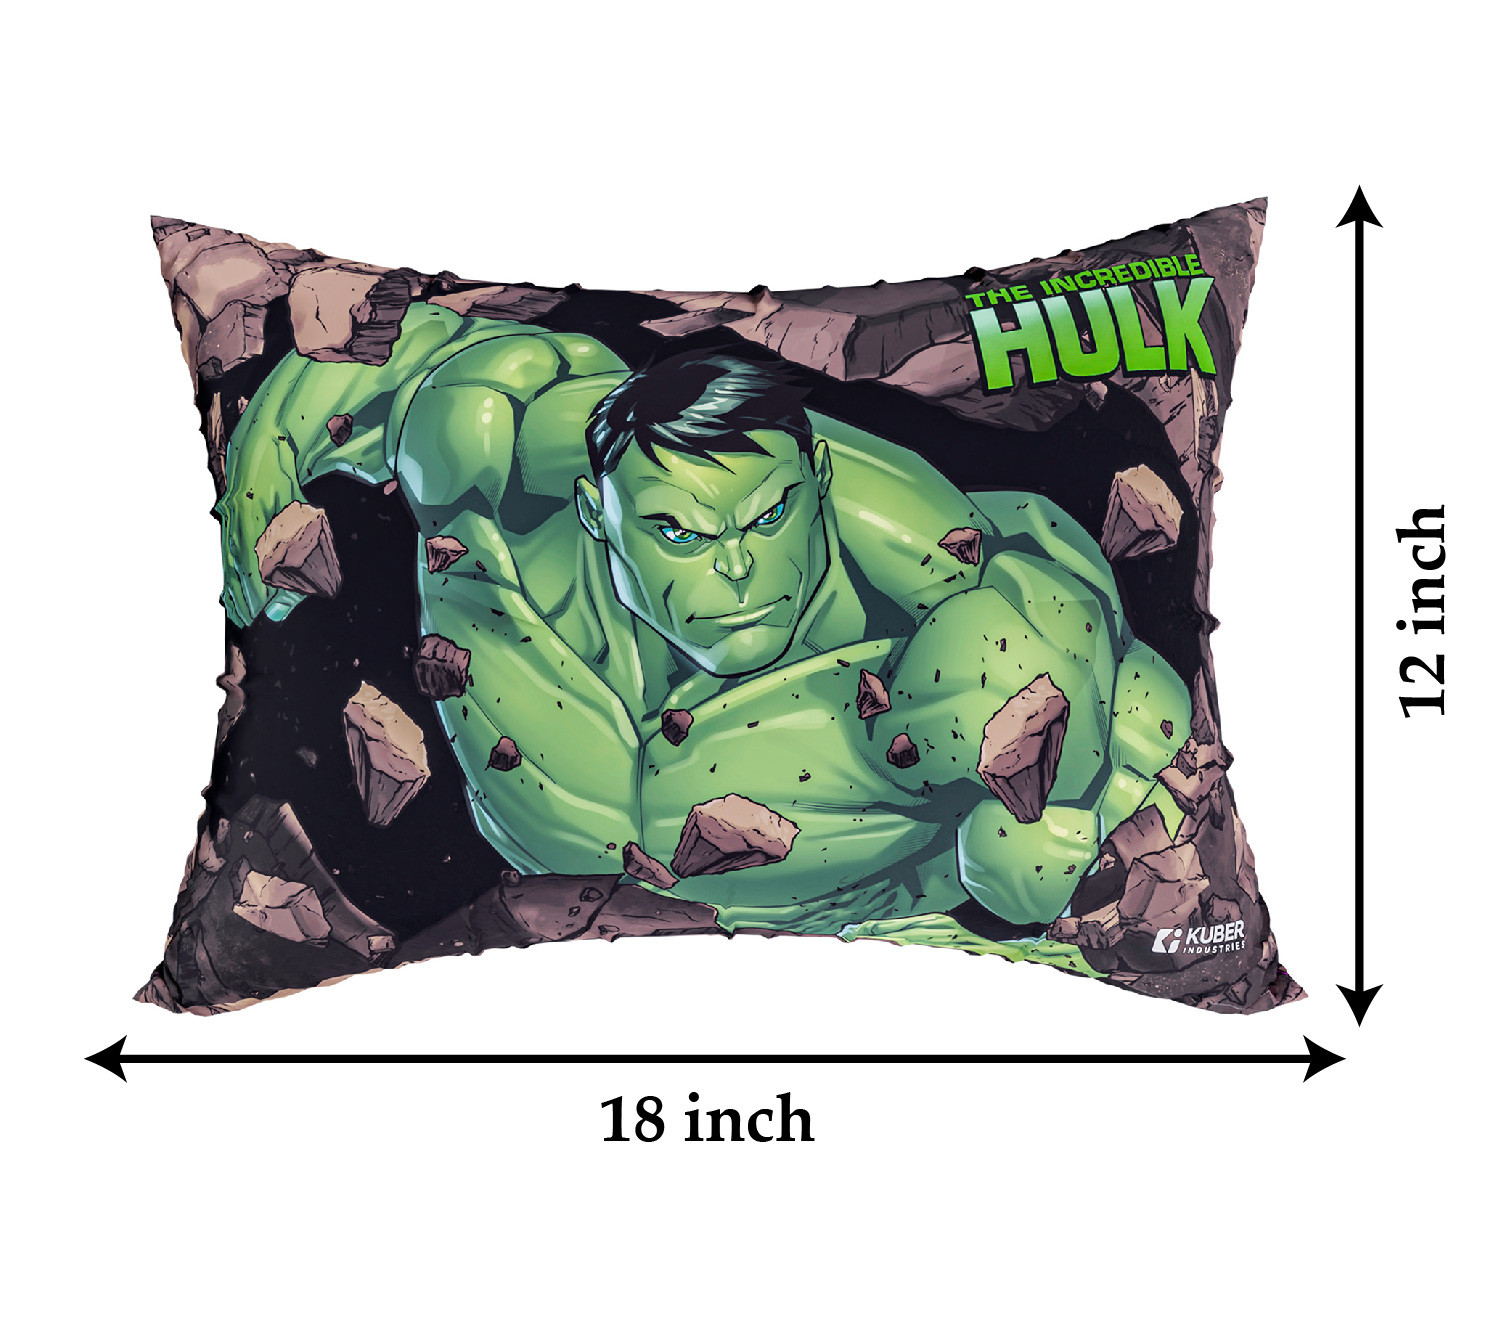 Kuber Industries Marvel Hulk Print Baby Pillow|Polyester Super soft Kids Pillow for Sleeping & Travel,12 x 18 Inch,(Green)